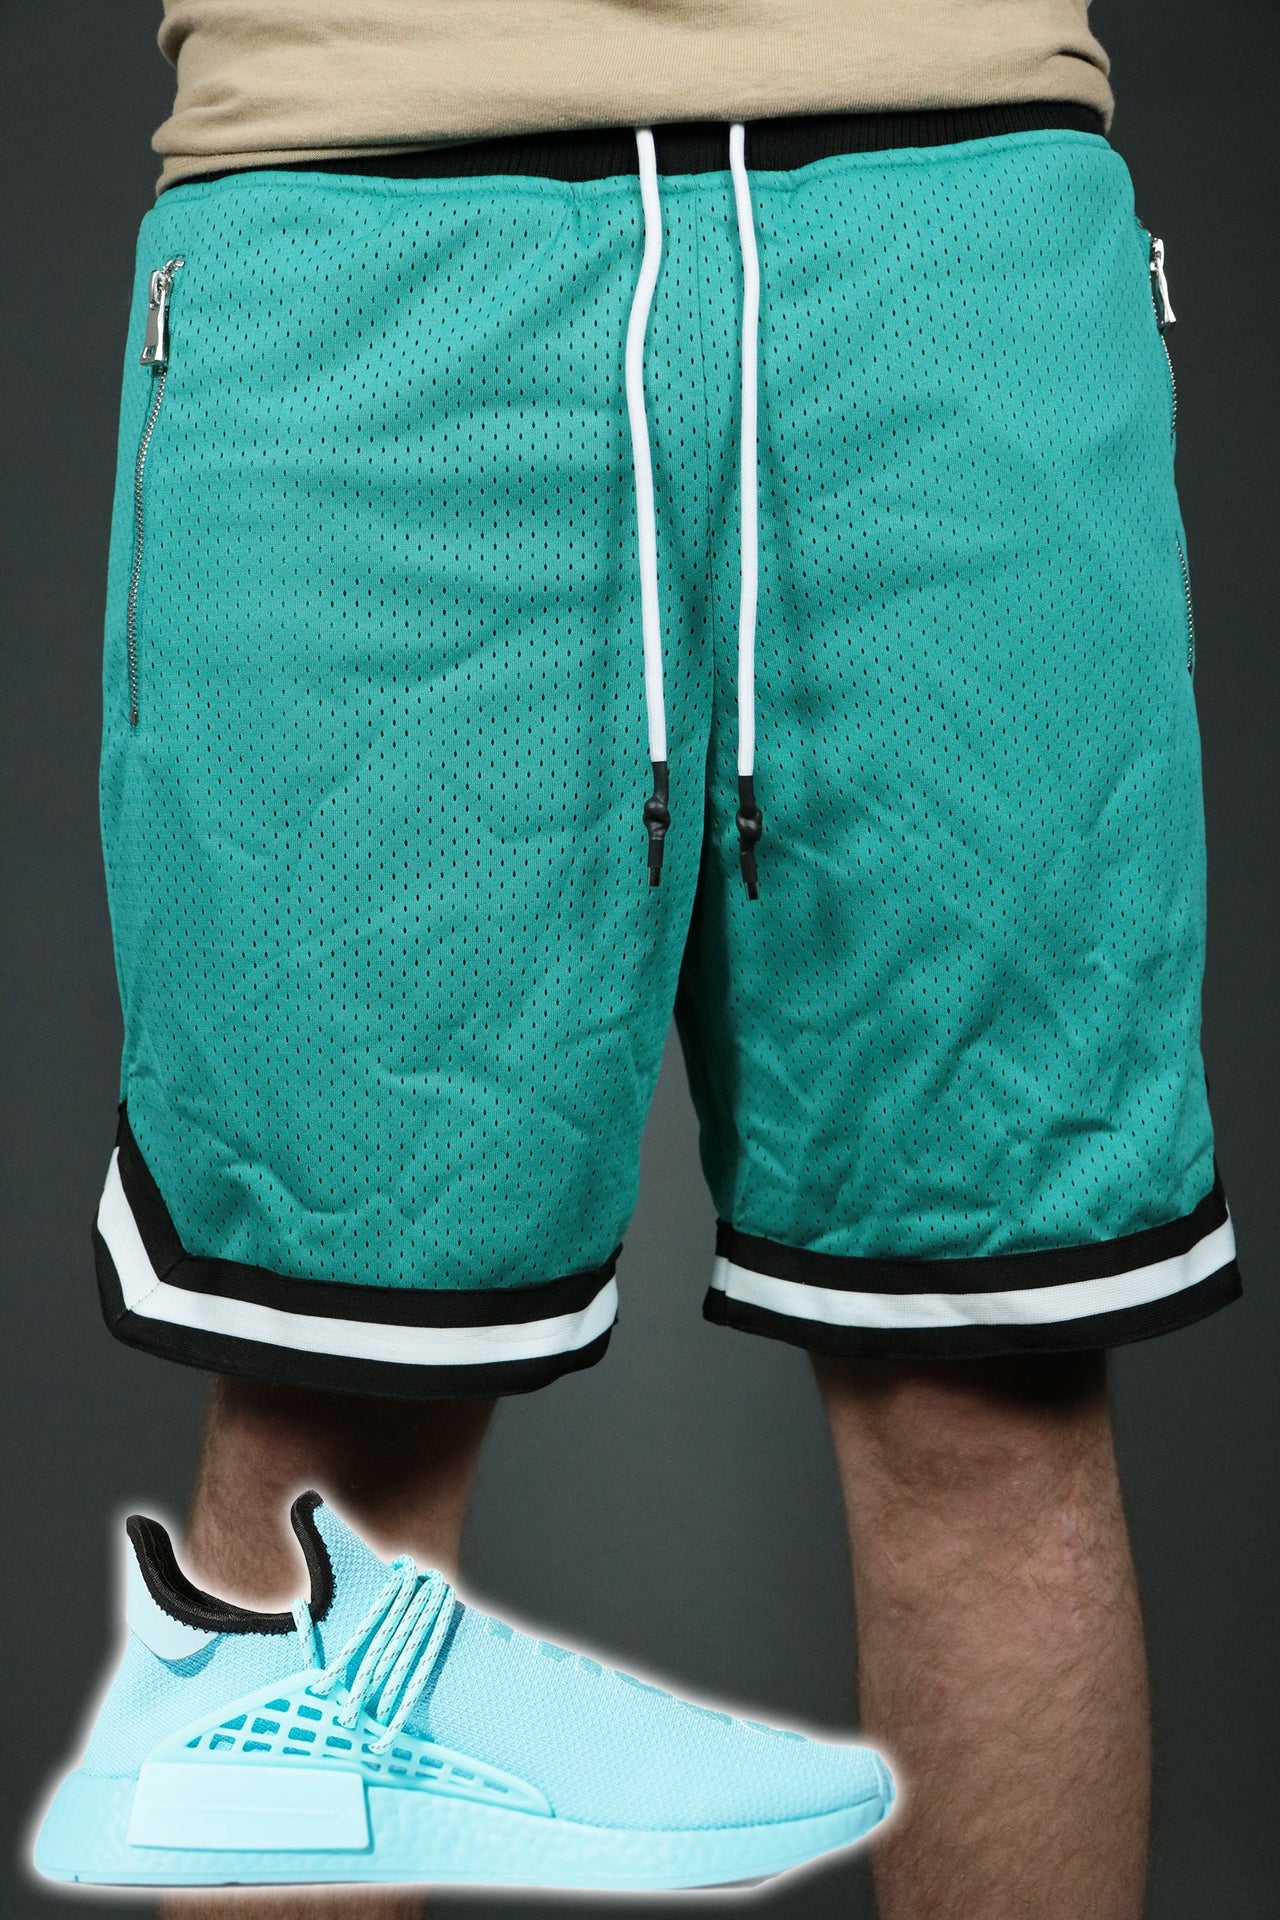 The retro San Antonio aqua shorts to match Pharell x NMD Hu sneakers by Jordan Craig.